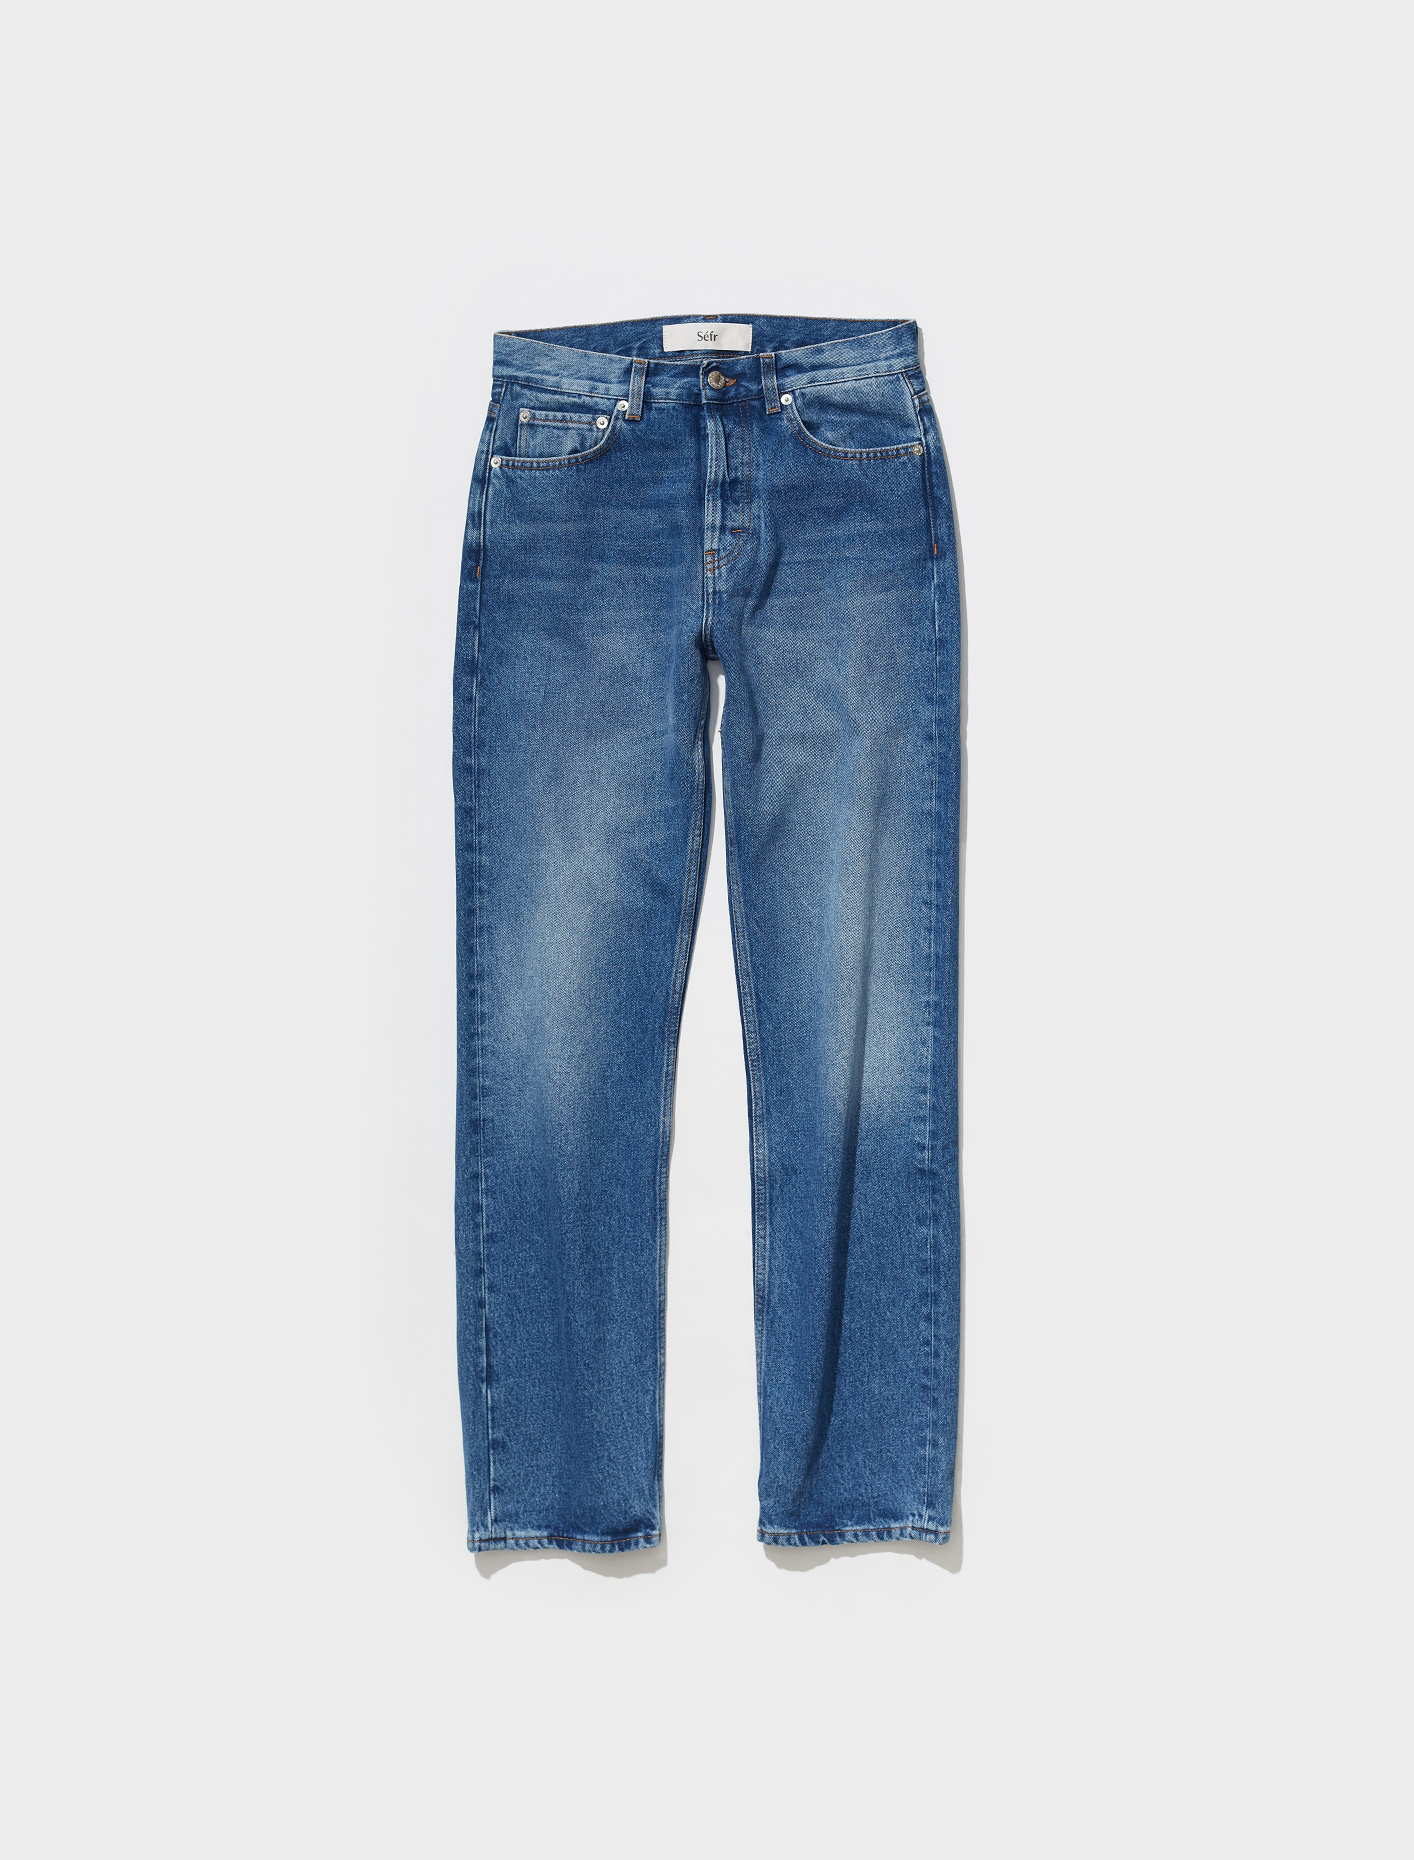 Straight Cut Jeans in Worn Wash